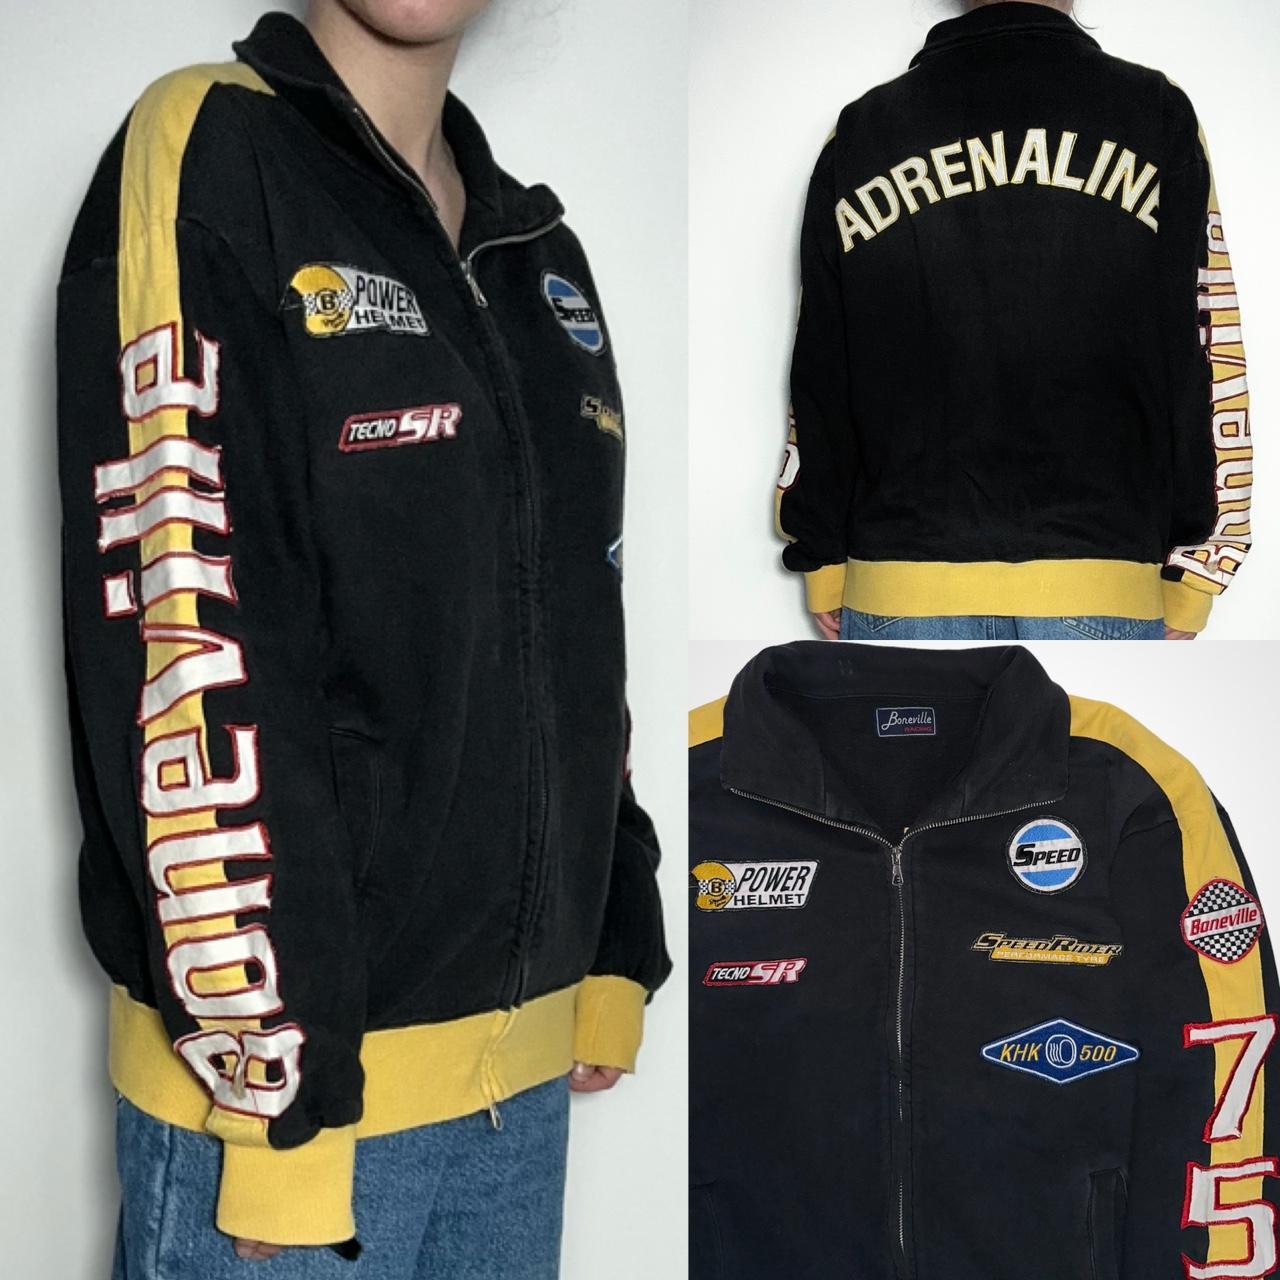 Vintage 90s Boneville Racing Nascar-style black/yellow racing track jacket